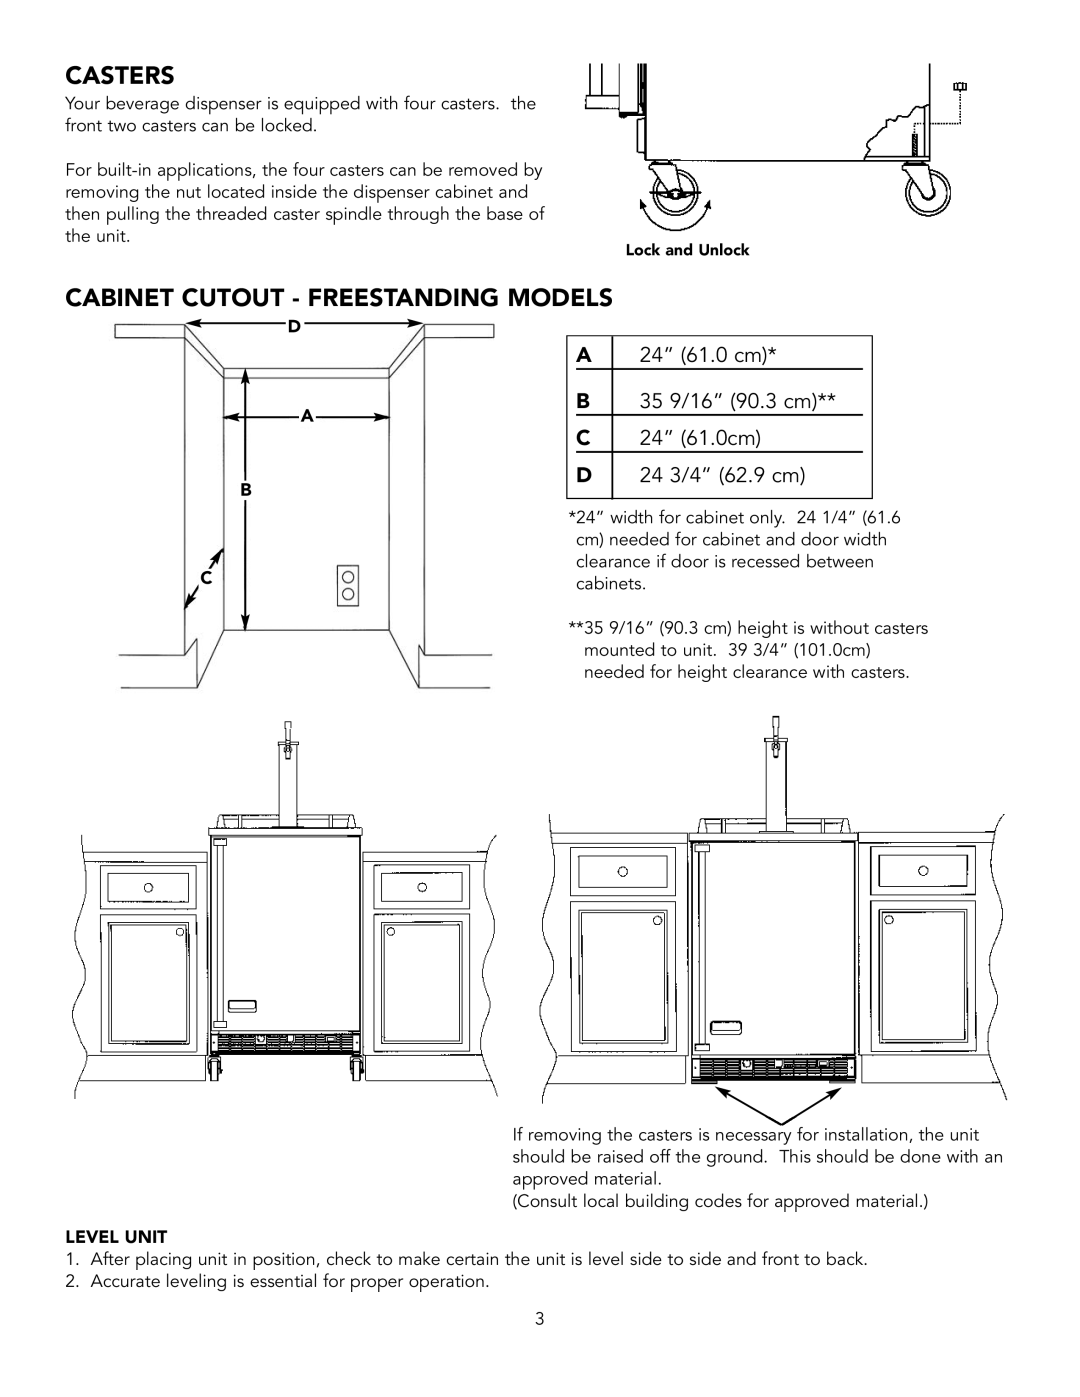 Viking VRBD/VUBD 24" W installation instructions Casters, Cabinet Cutout - Freestanding Models, Level Unit 